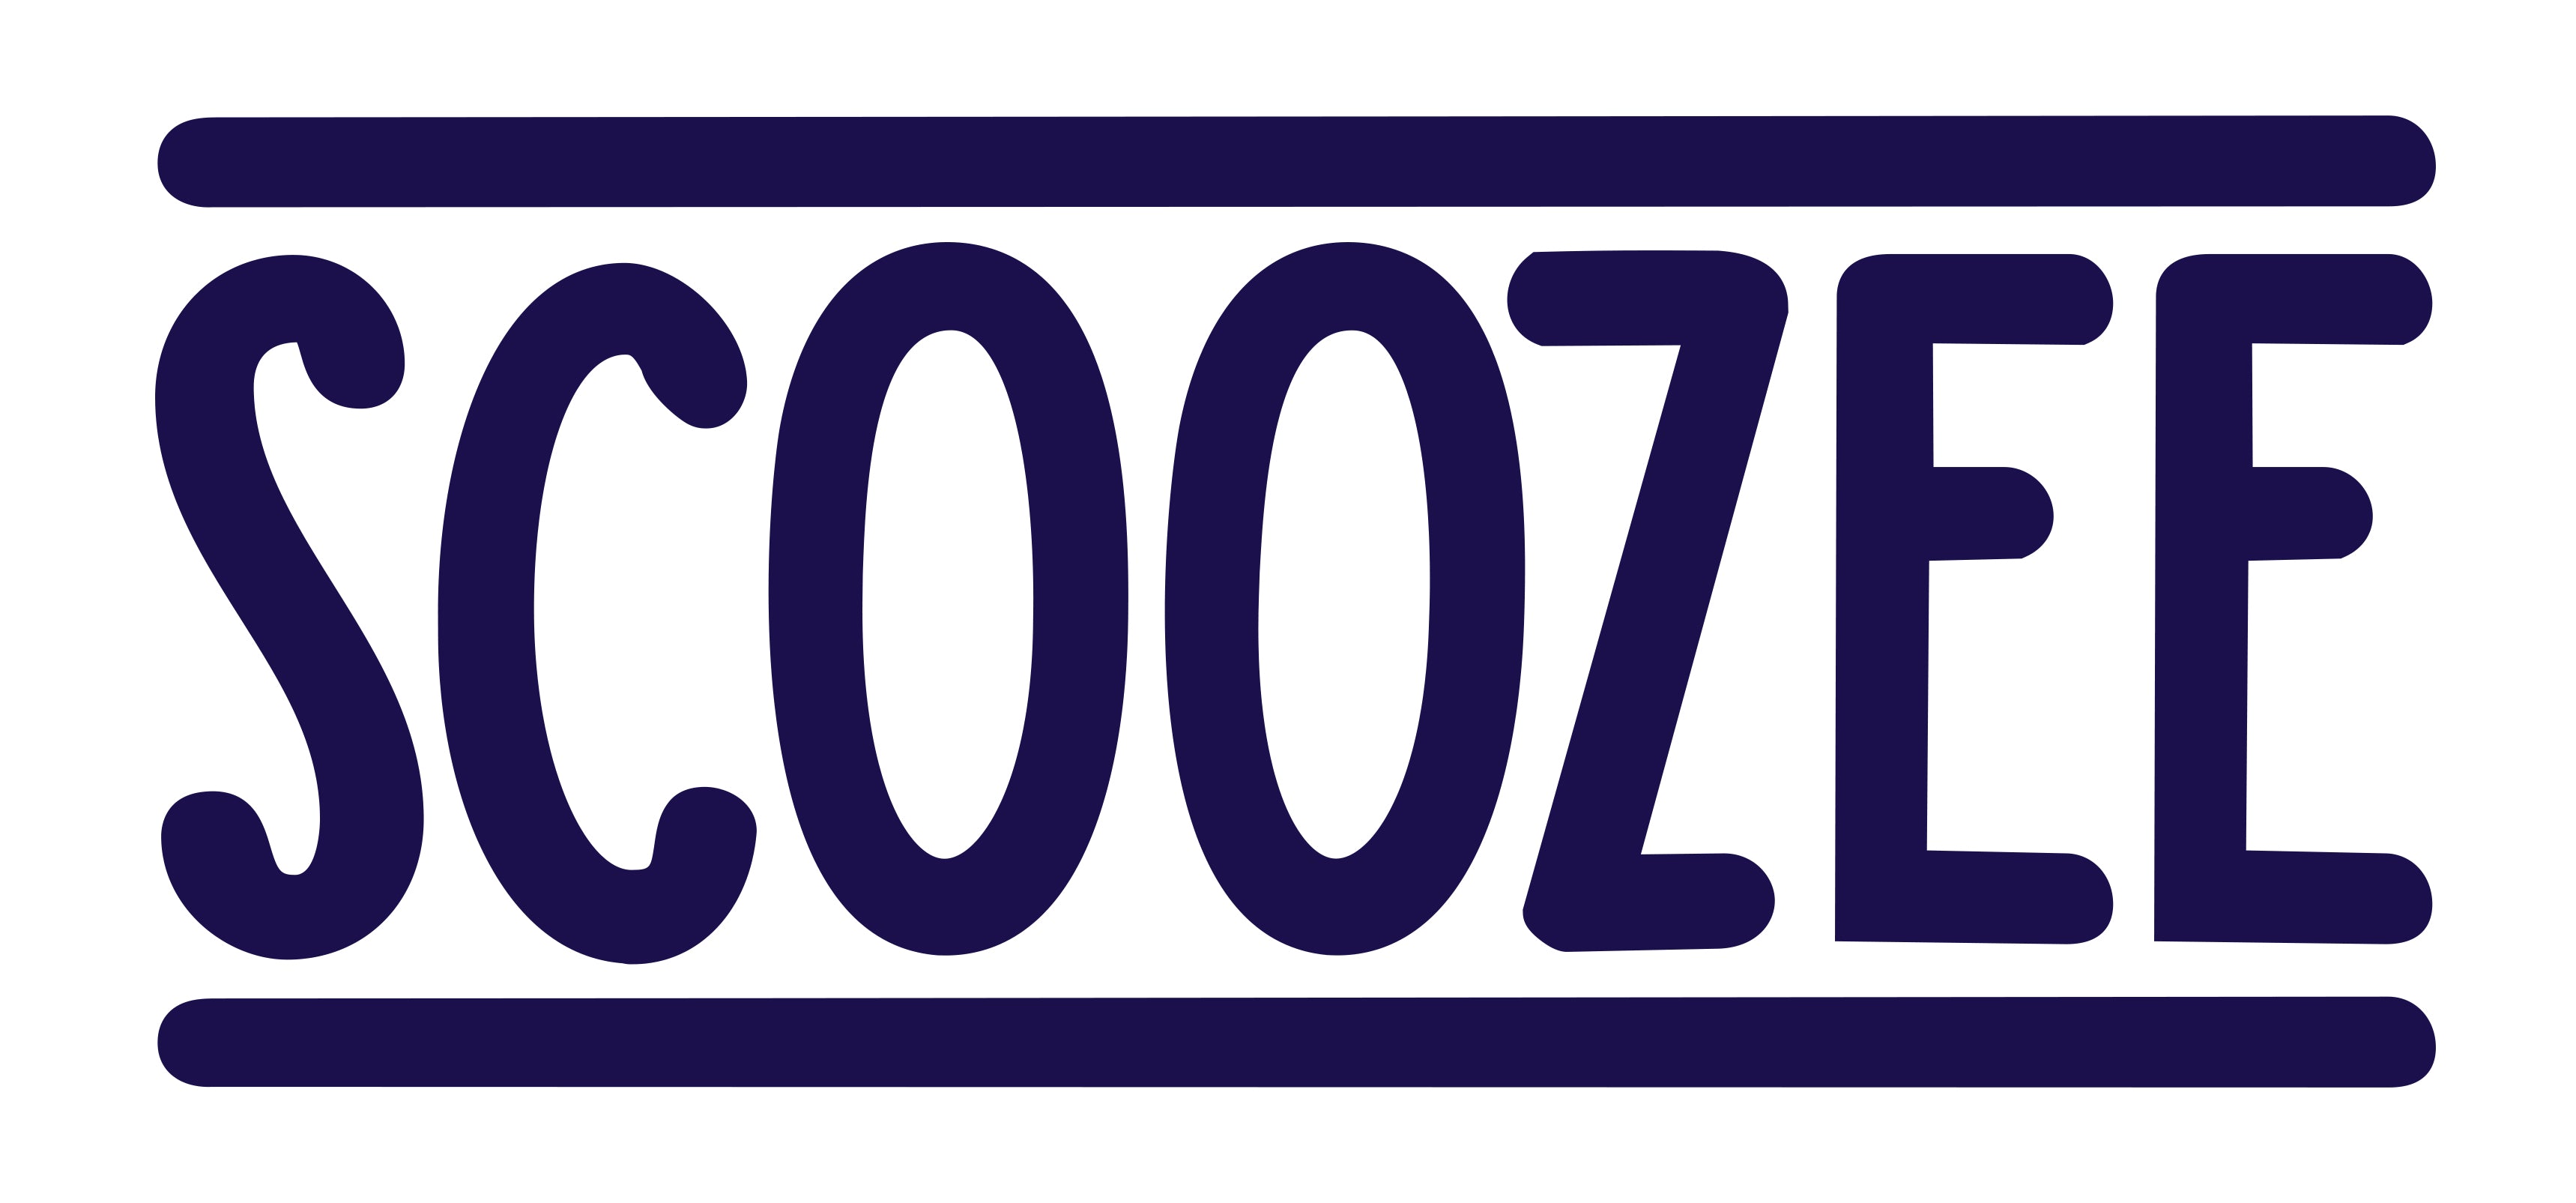 Scoozee